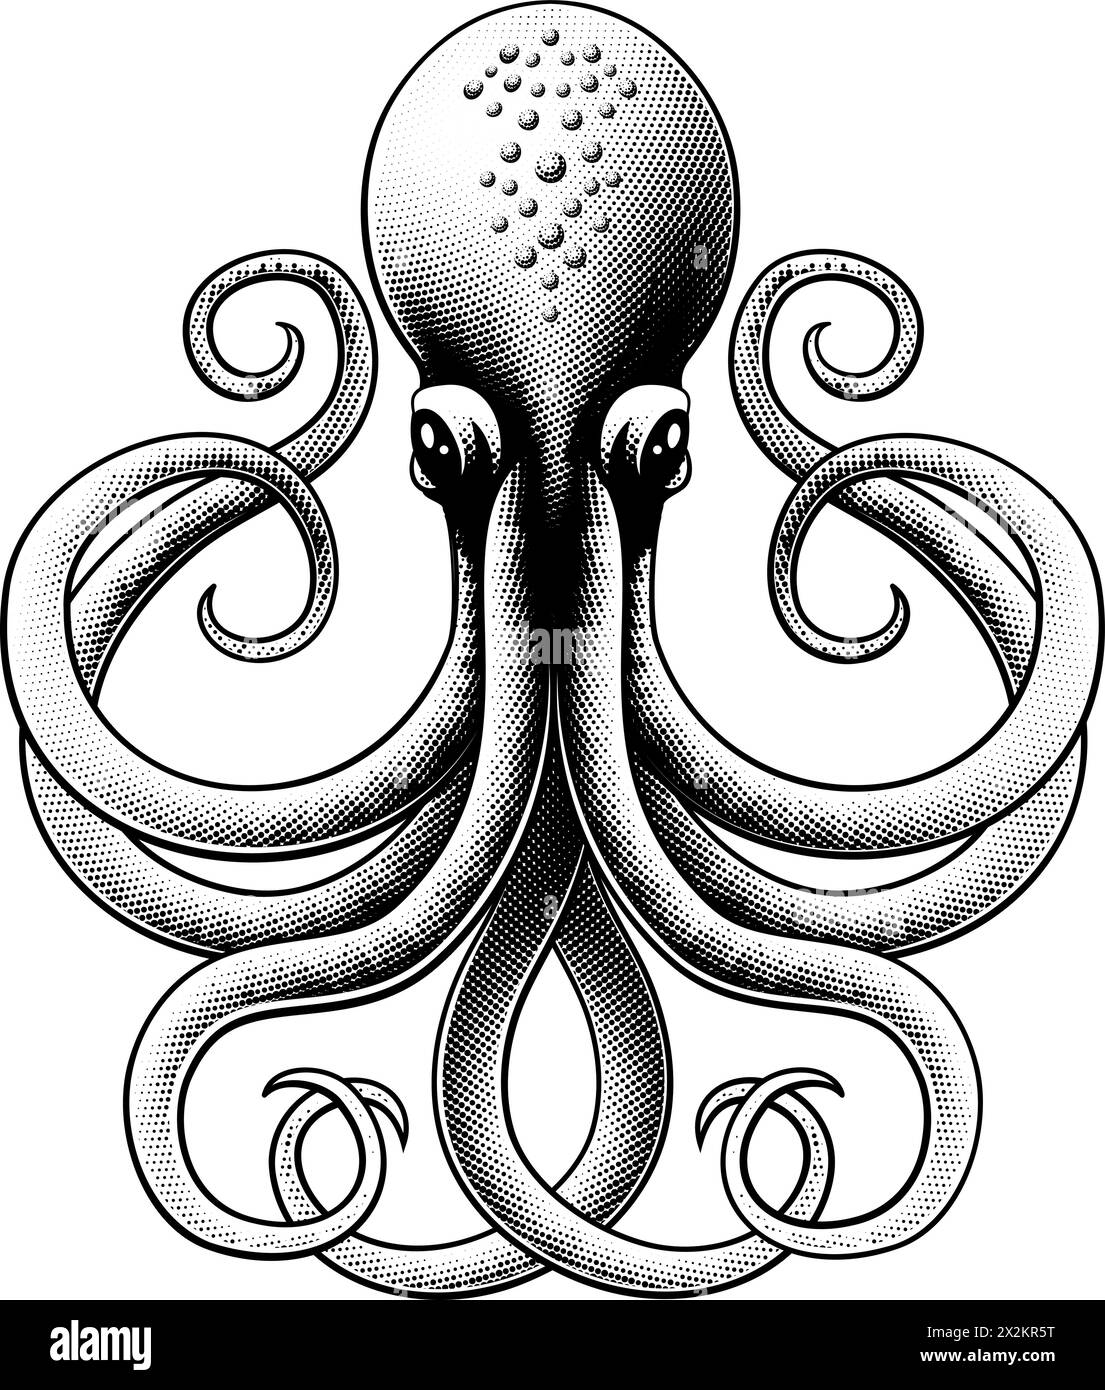 Octopus Kraken Squid Monster Illustration Stock Vector